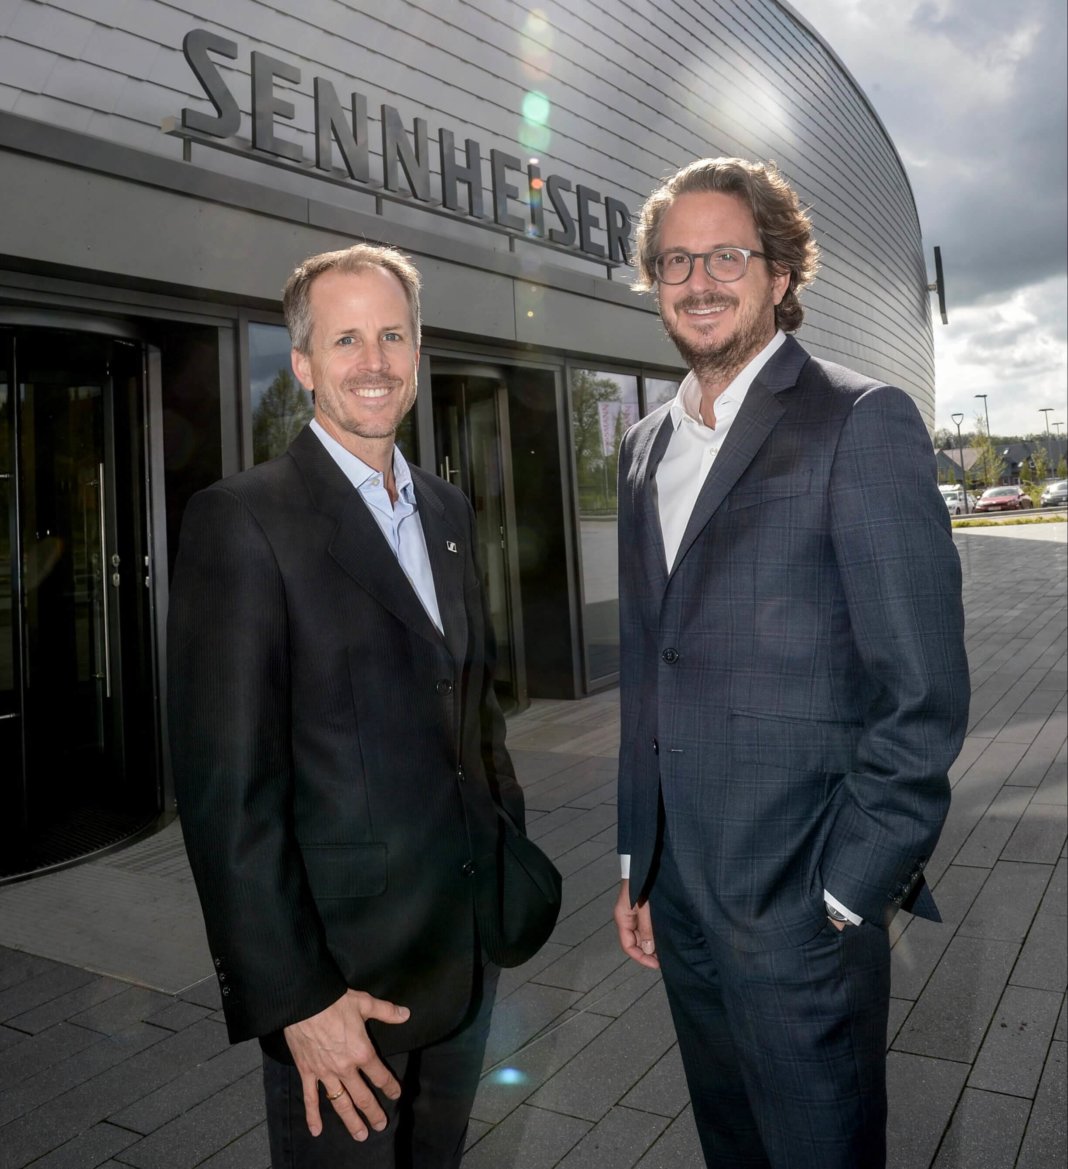 sennheiser-the-sound-of-family-business-success